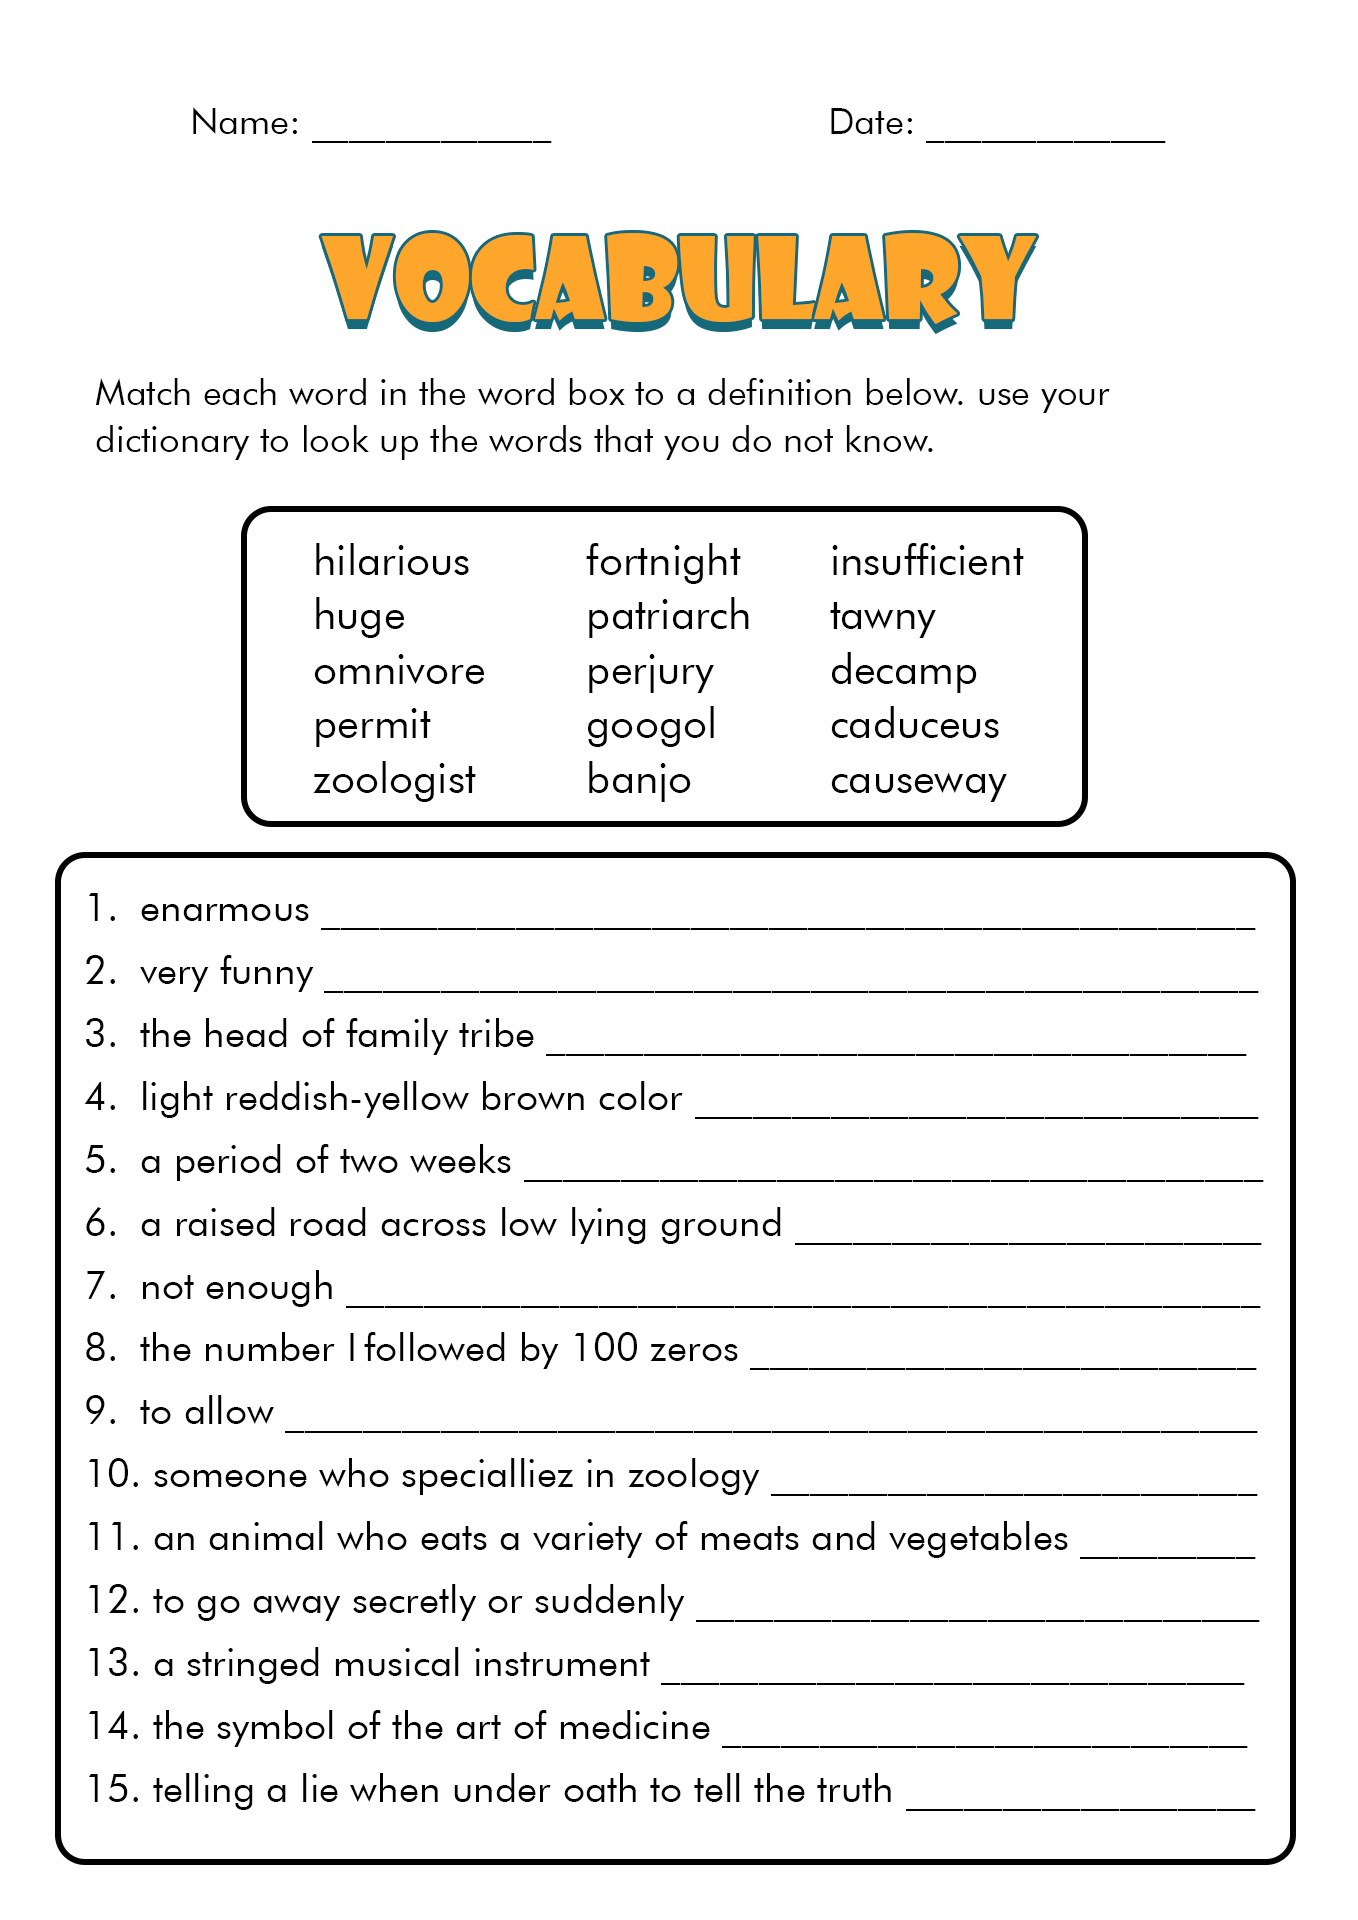 10 Best Images of Free Printable Spelling Test Worksheets Printable